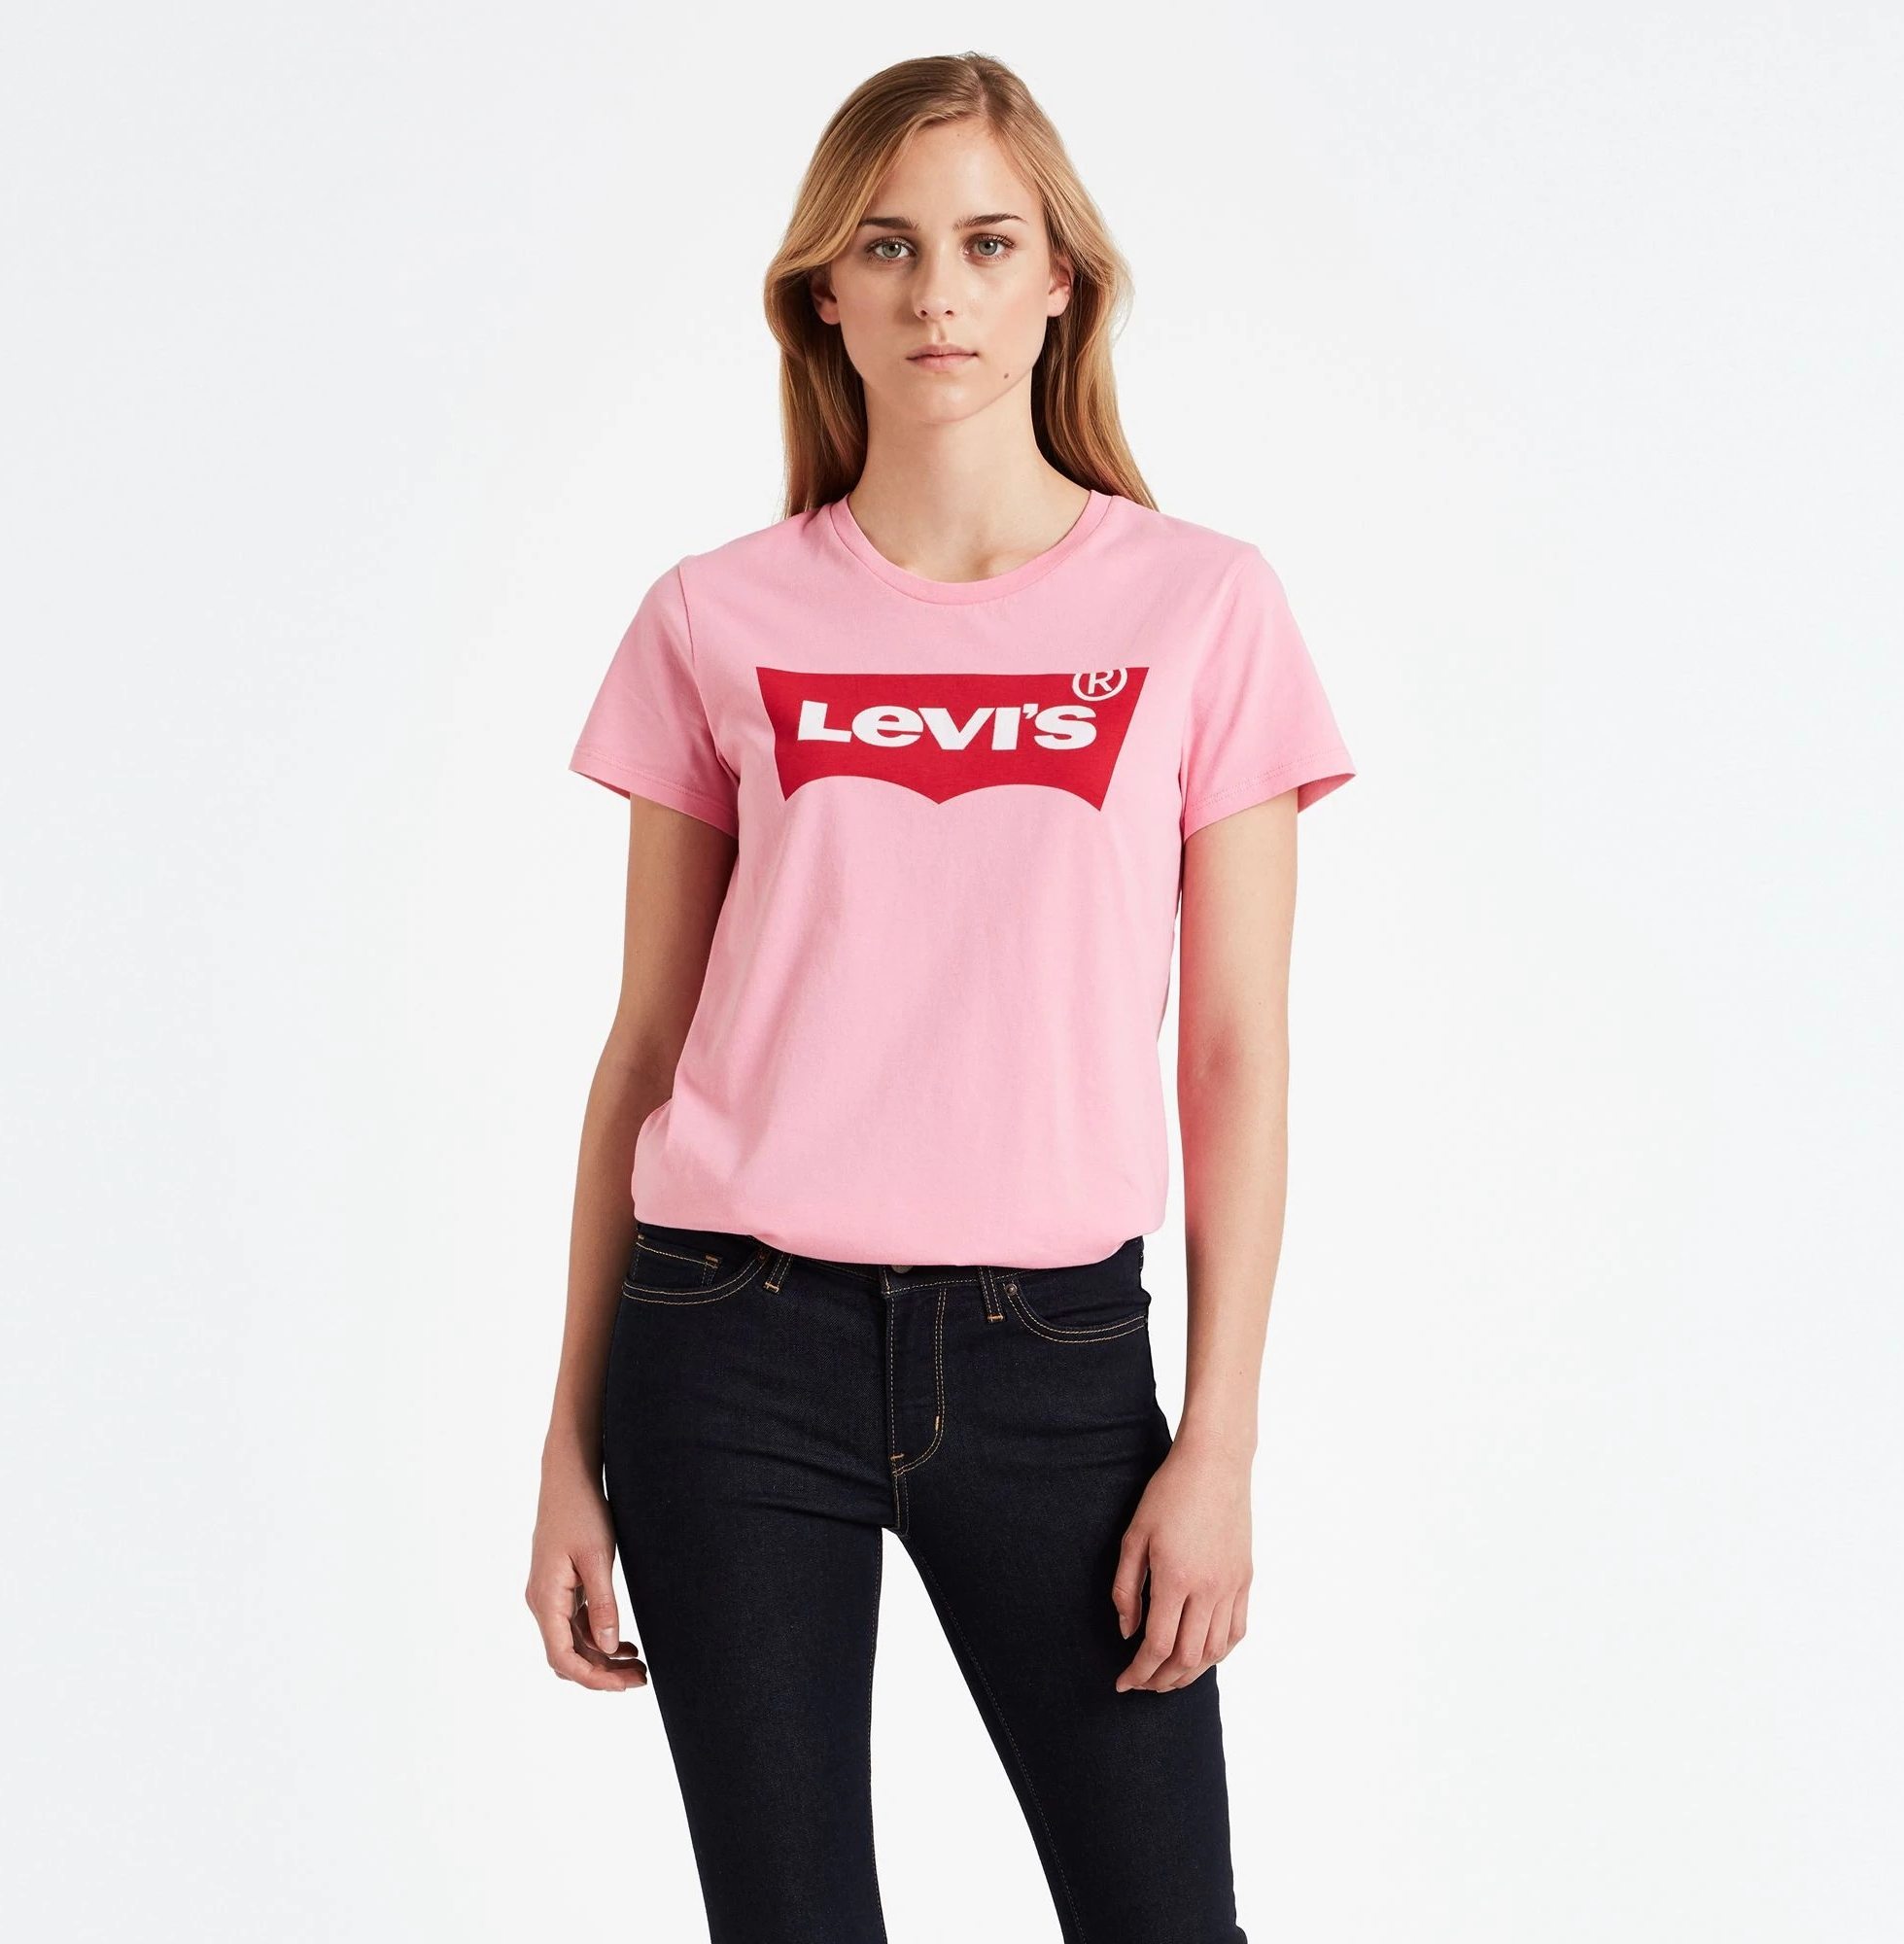 levis pink tshirt